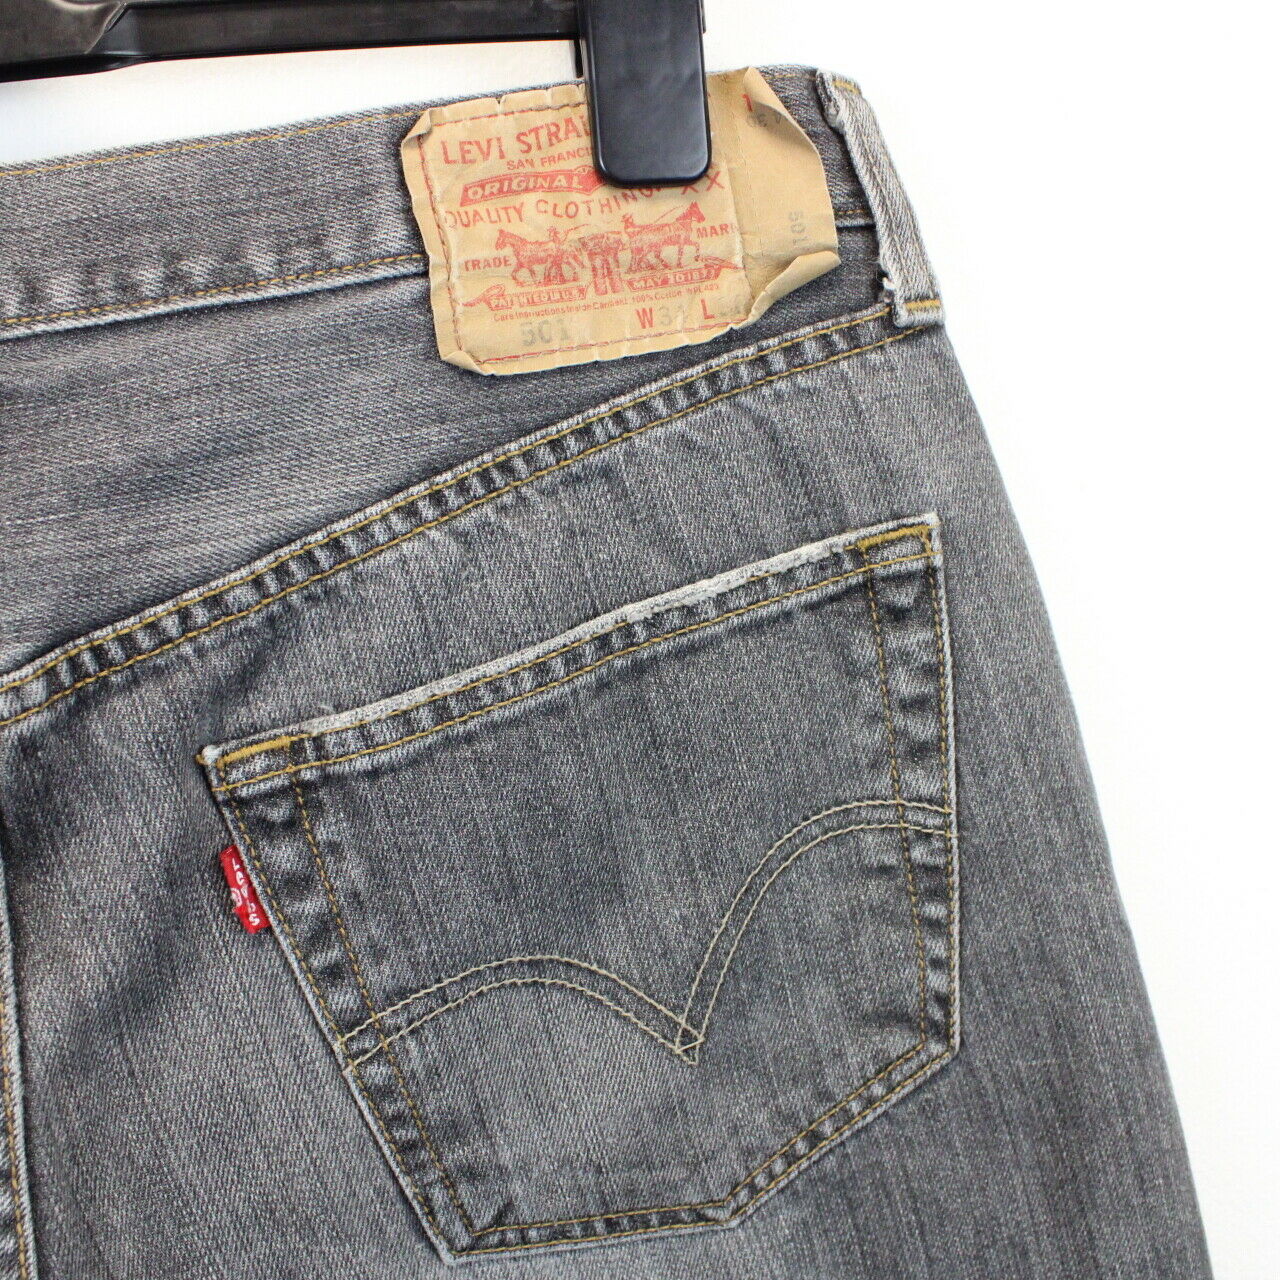 LEVIS 501 Jeans Grey Charcoal | W34 L30